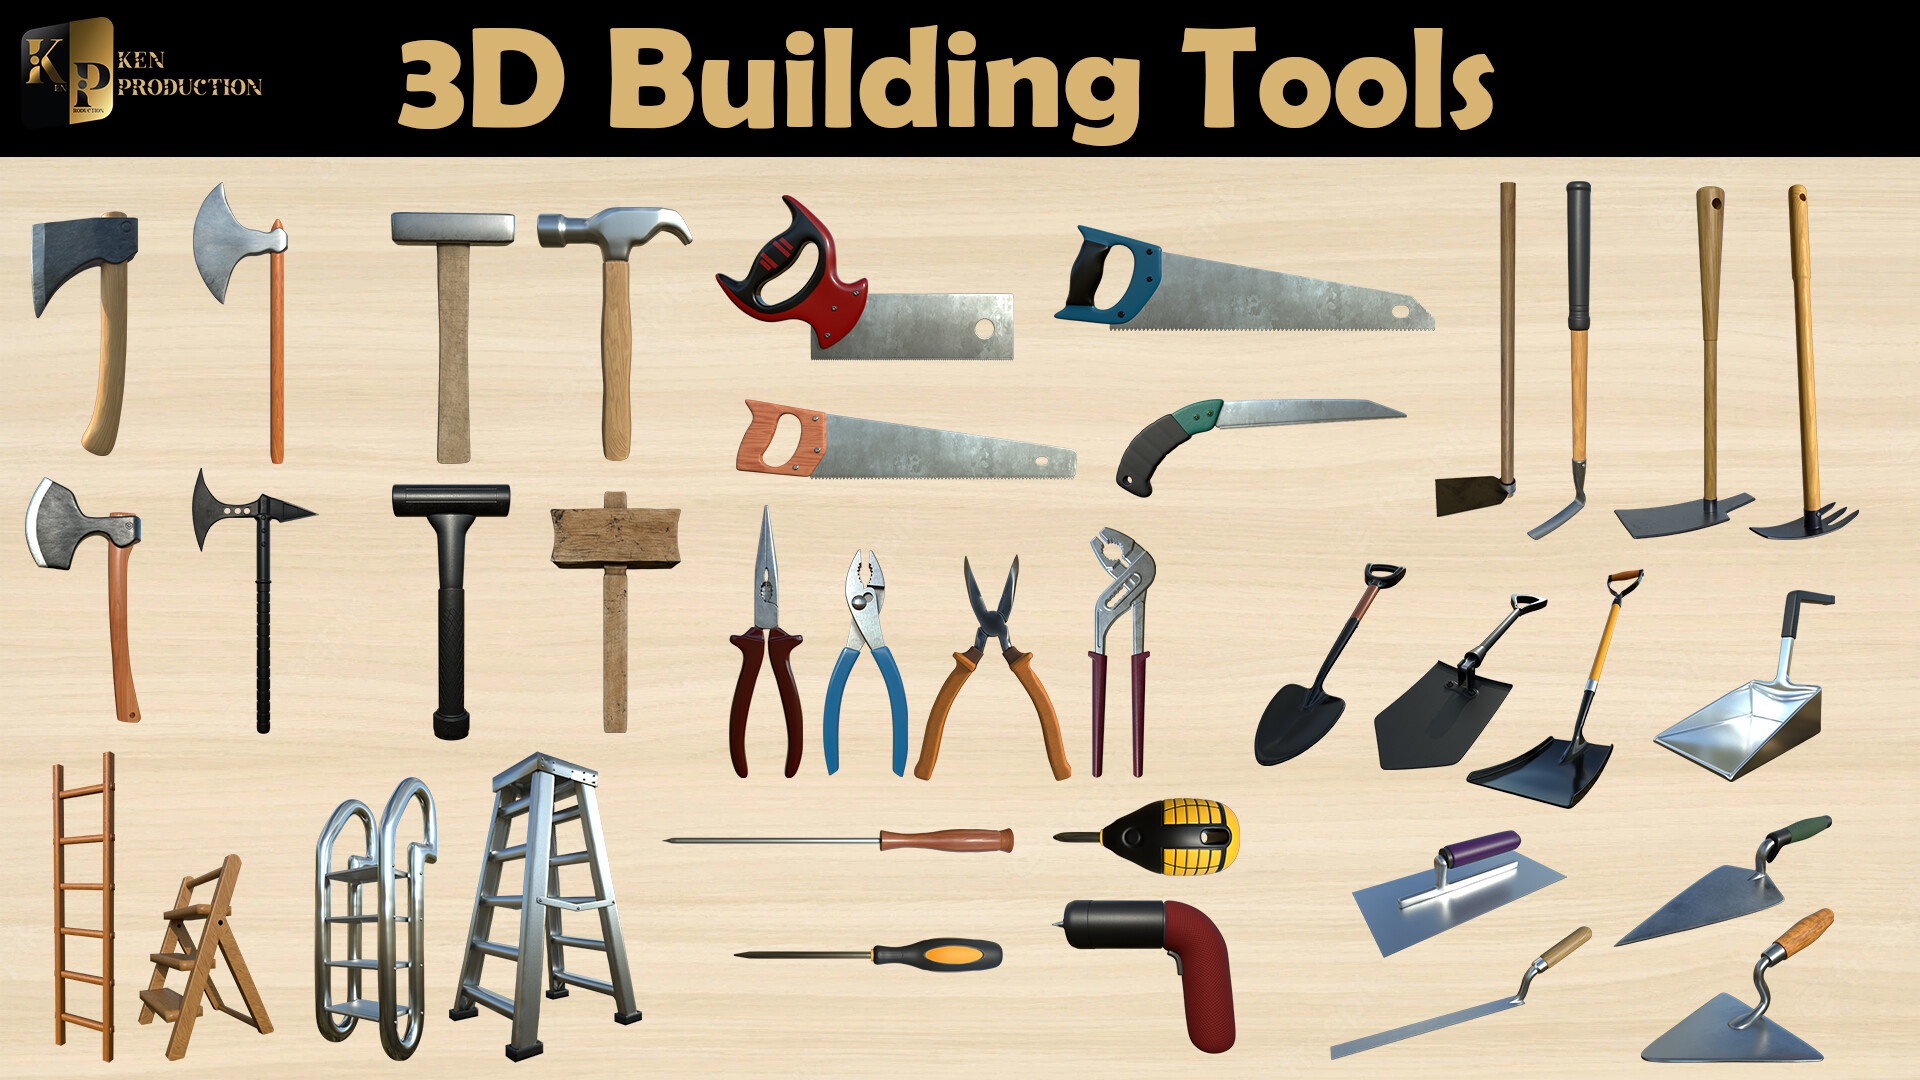 Tool now. Build Tools. Building Tools.